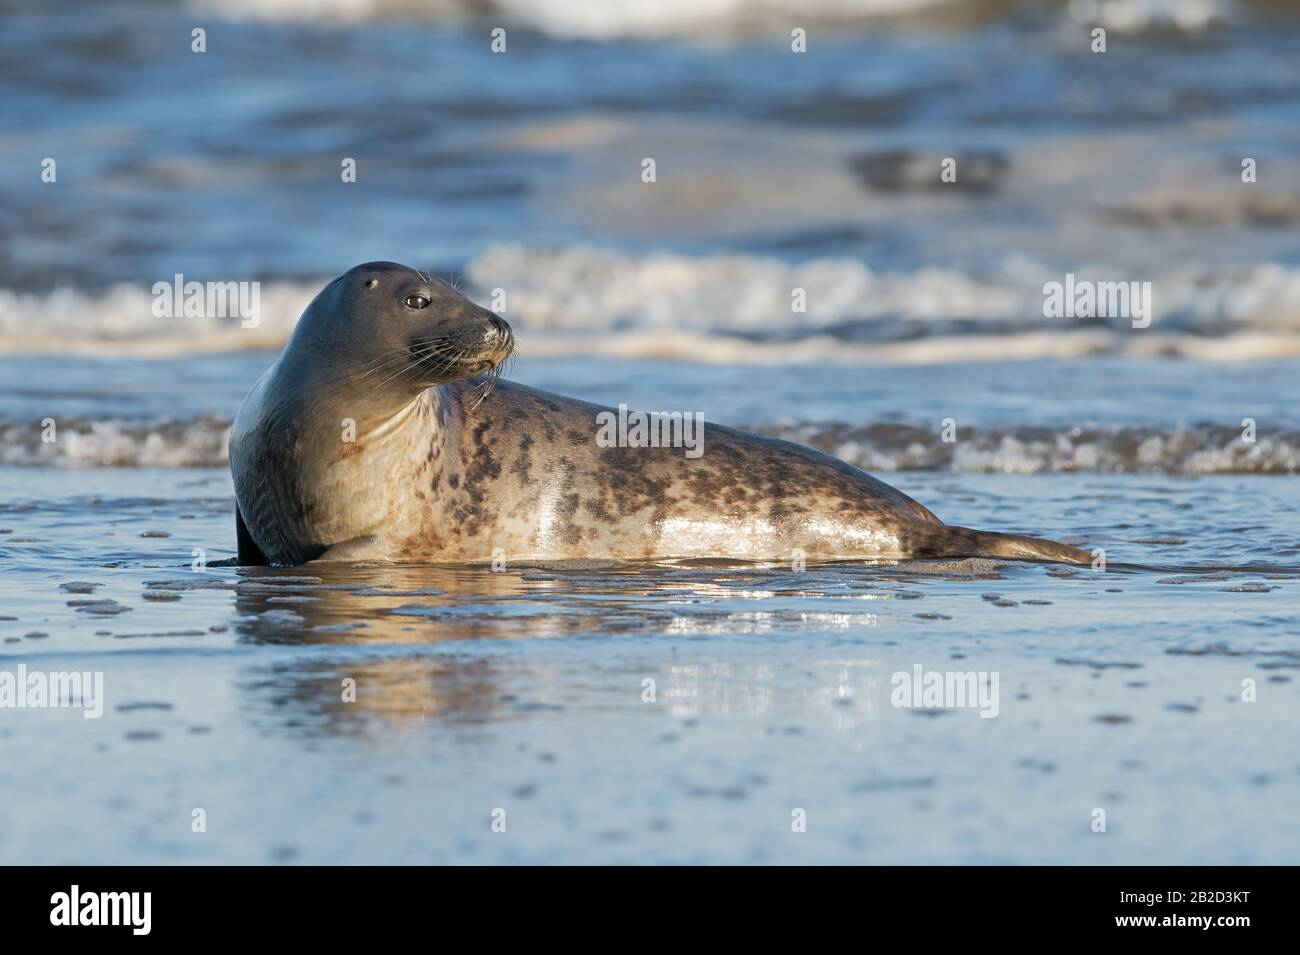 Harbor Seal (Phoca vitulina) at the edge of the ocean Stock Photo